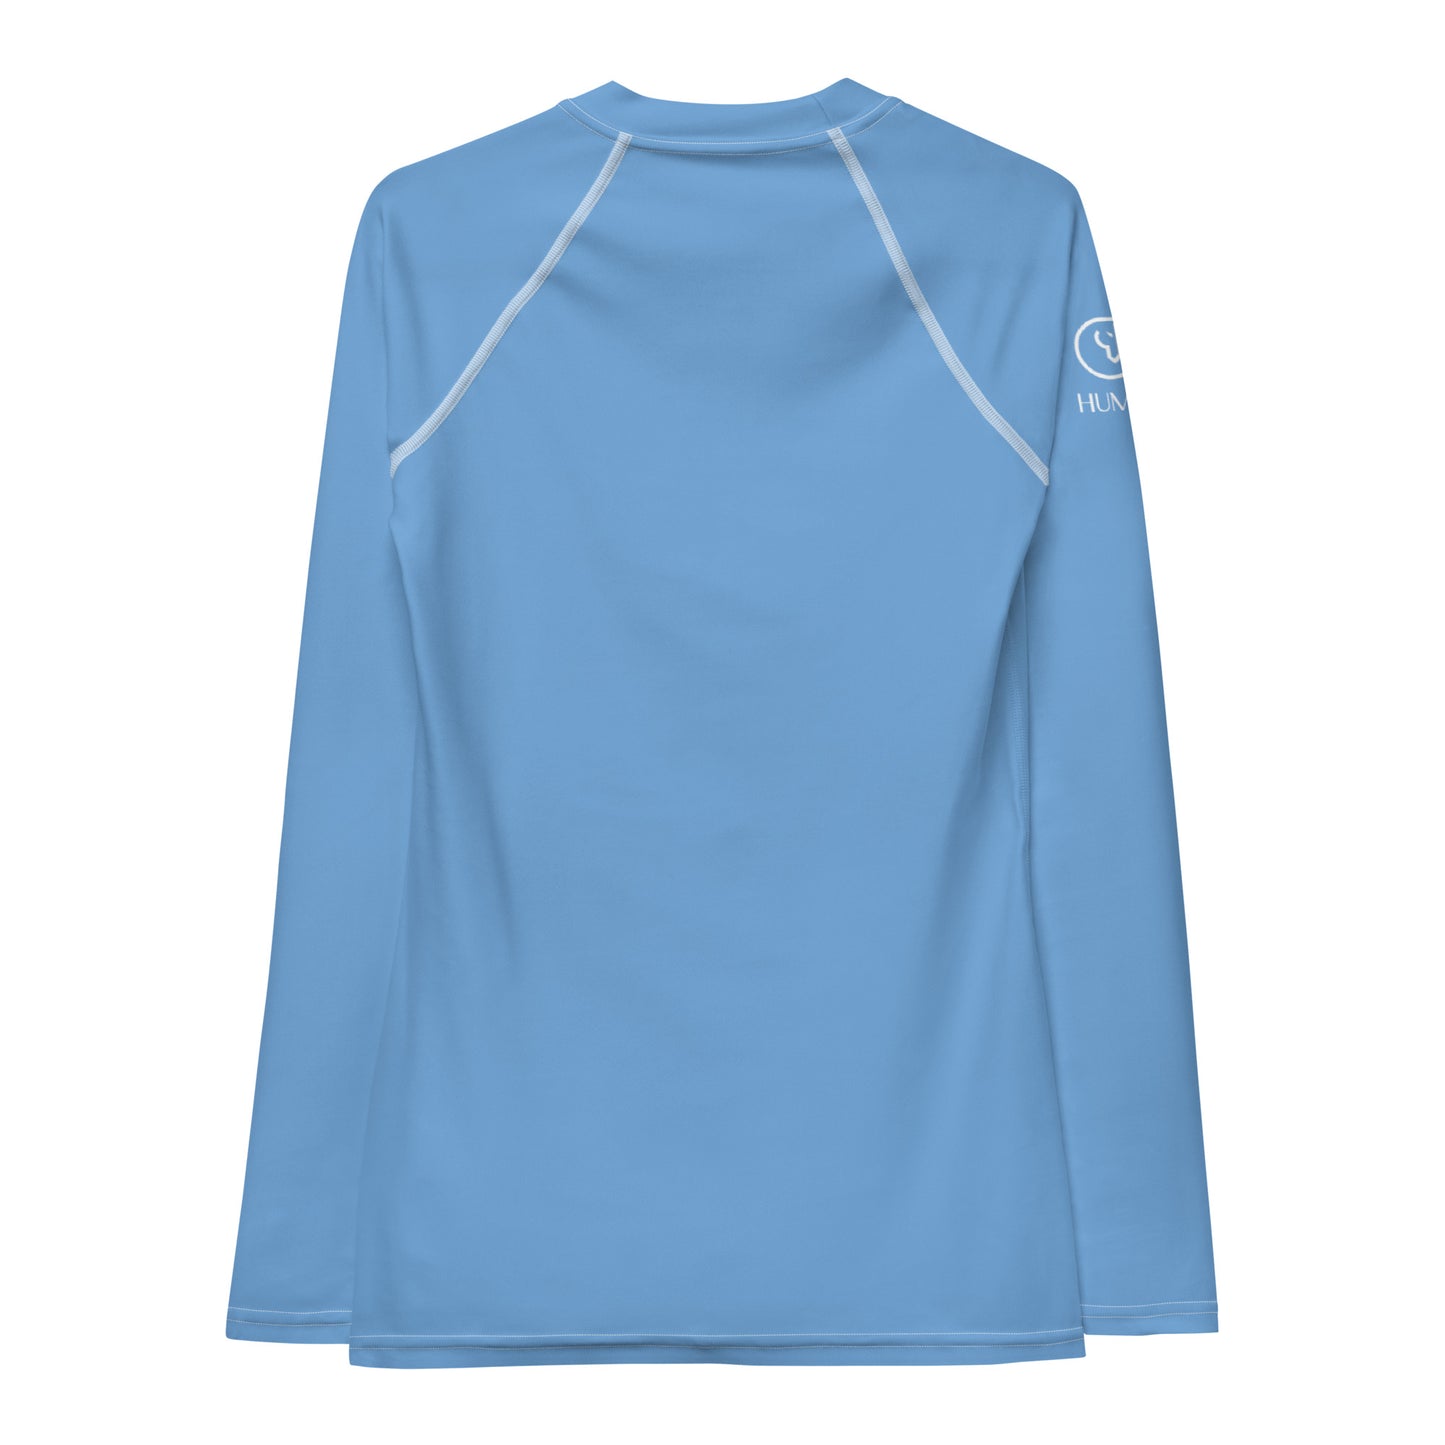 Humble Sportswear™ Women's Jordan Blue Rash Guard - Mireille Fine Art